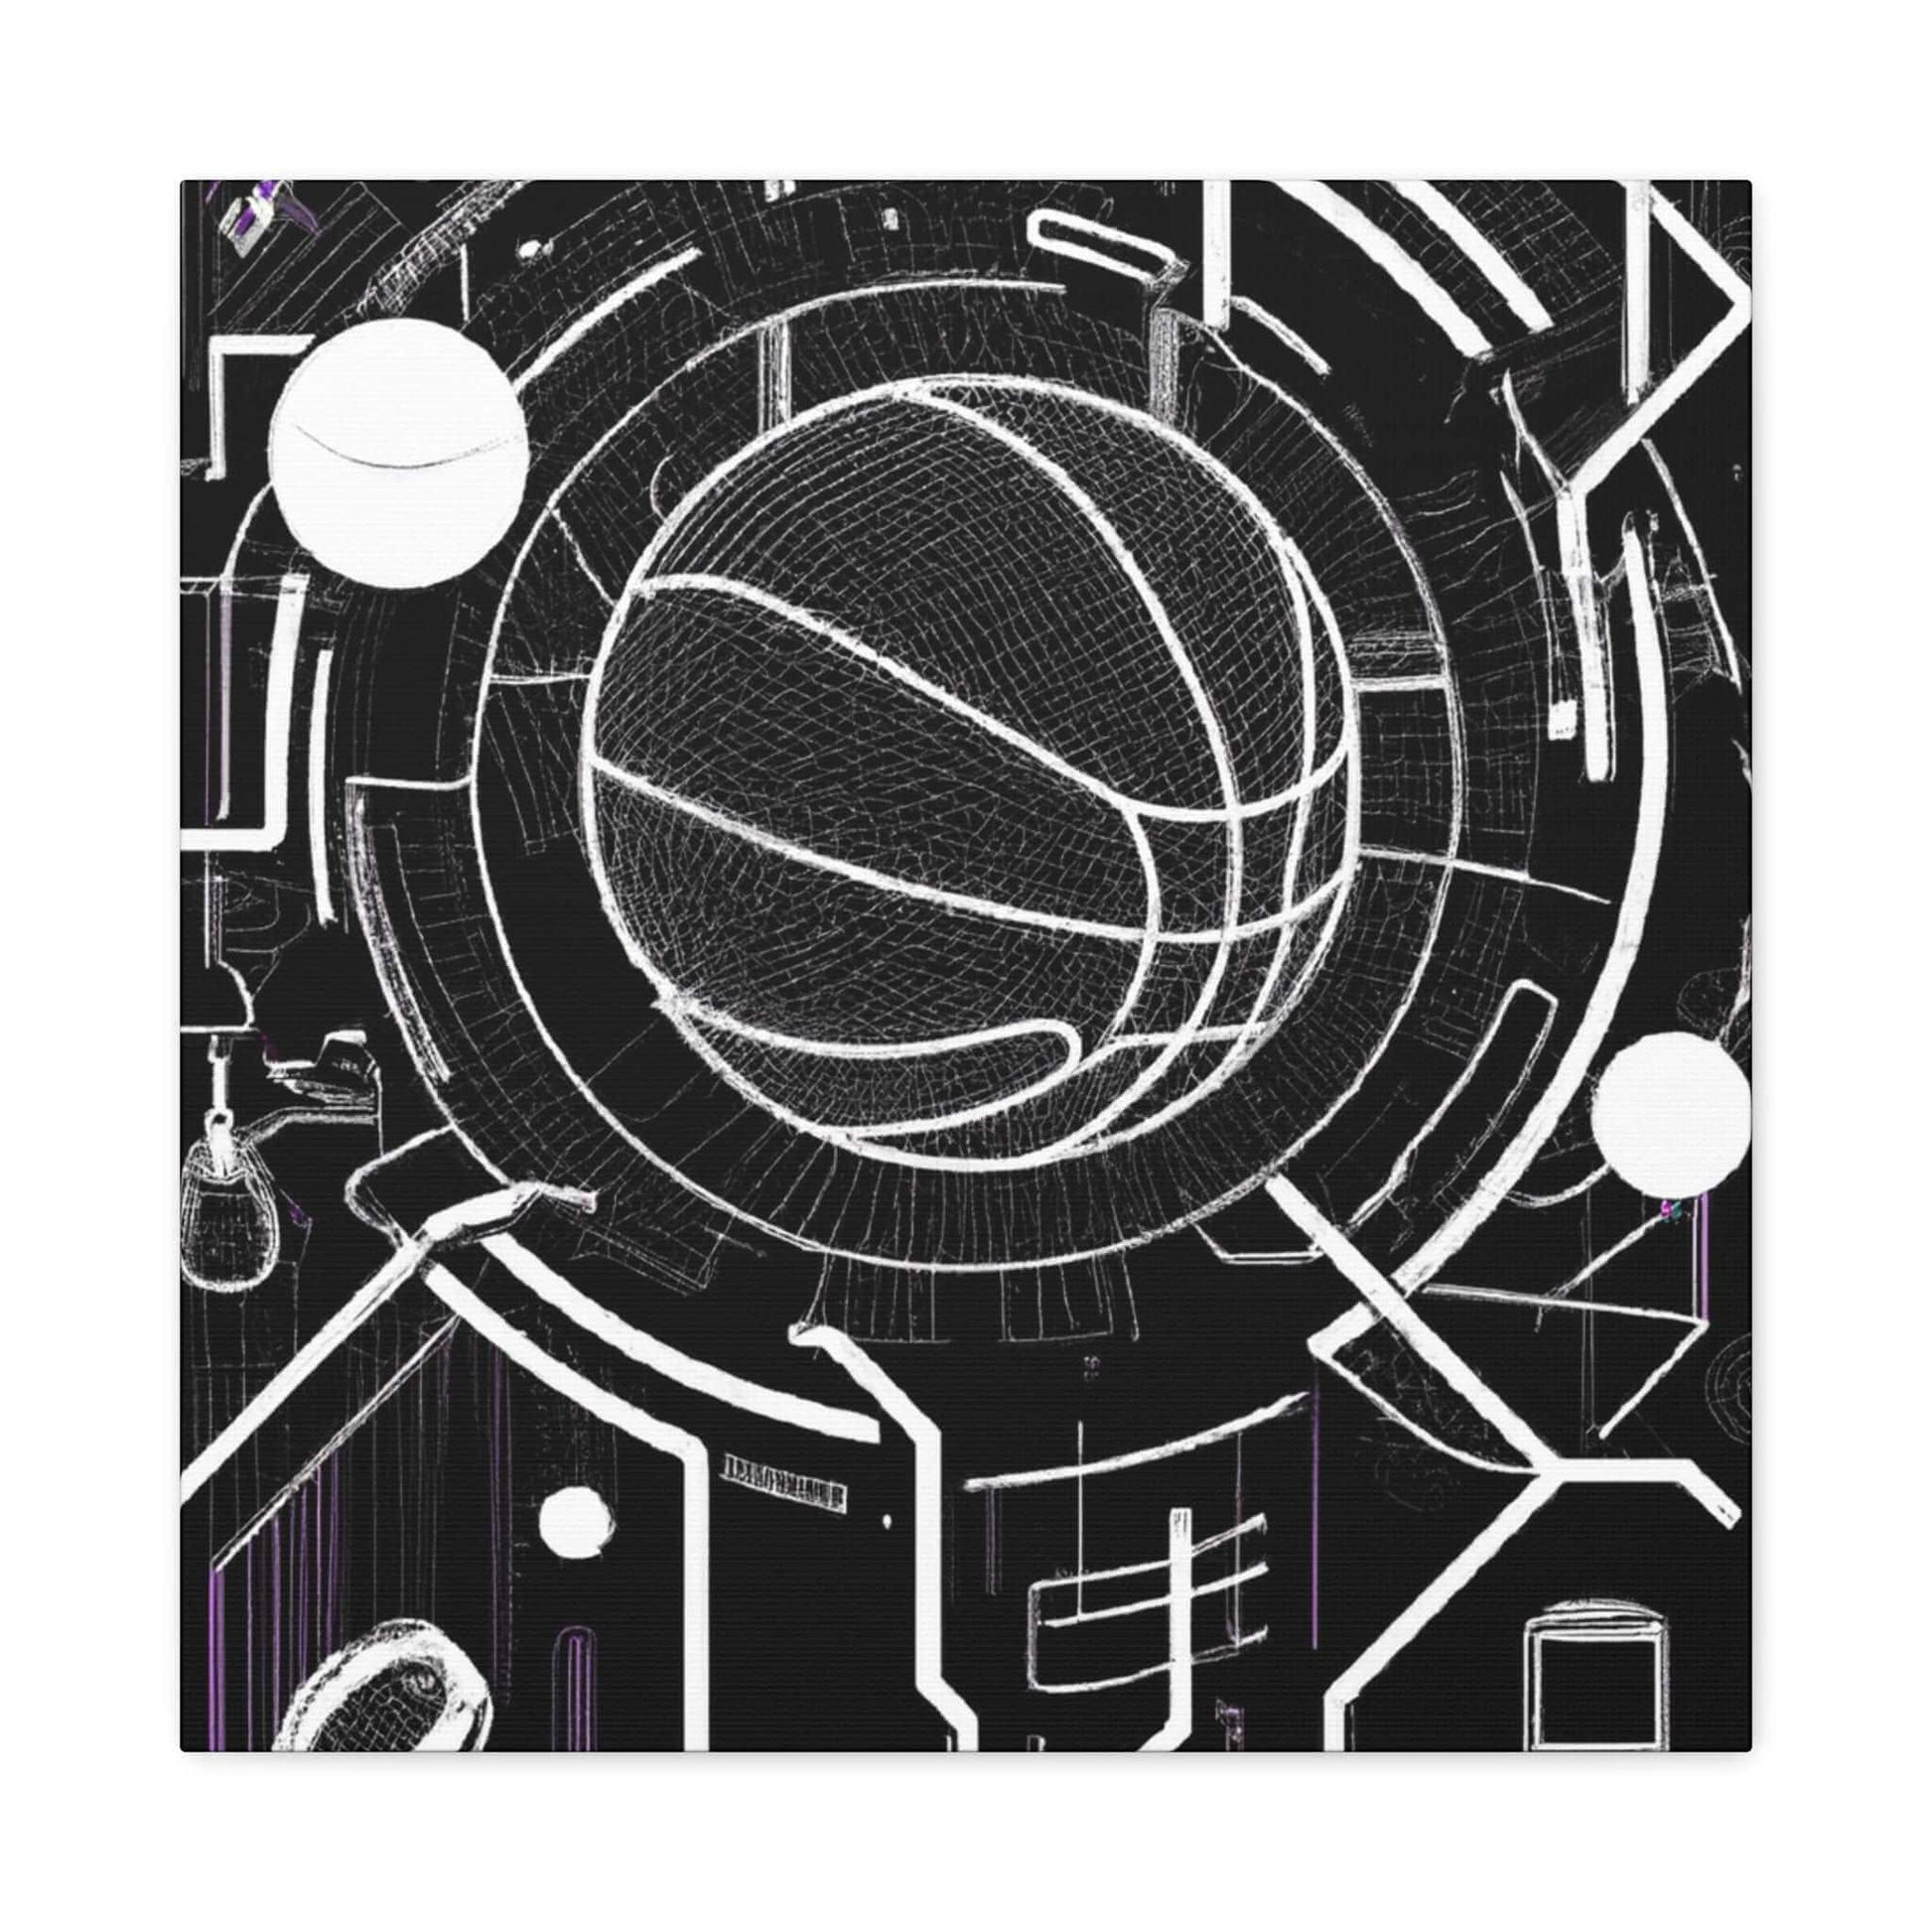 Neon Court: Basketball Dreamscapes Canvas Print - Canvas - Basketball Art 